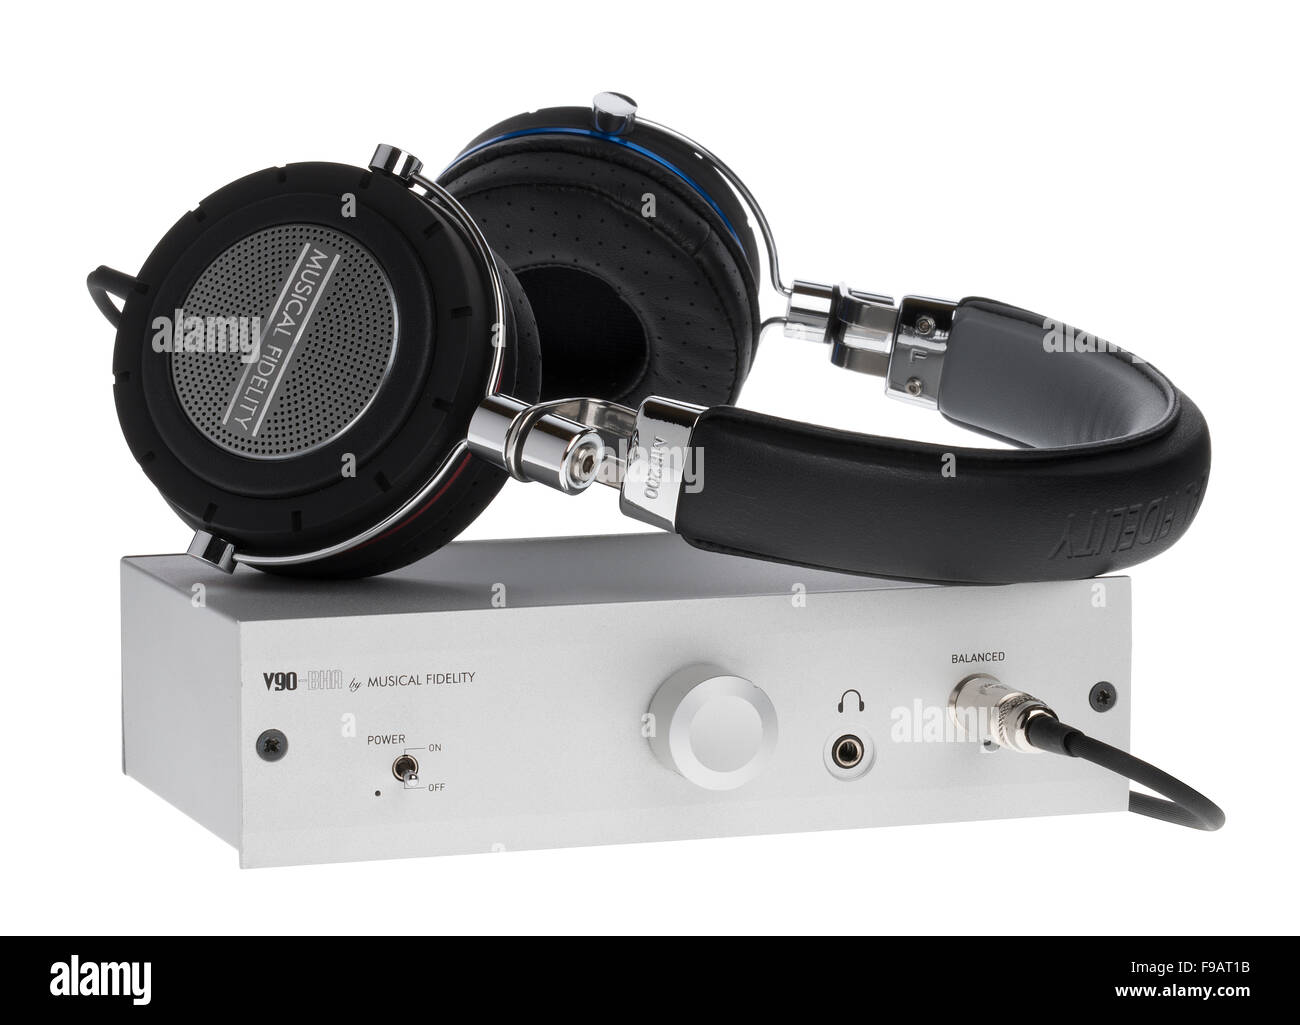 Musical Fidelity balanced audio headphone amplifier and headphones. Stock Photo